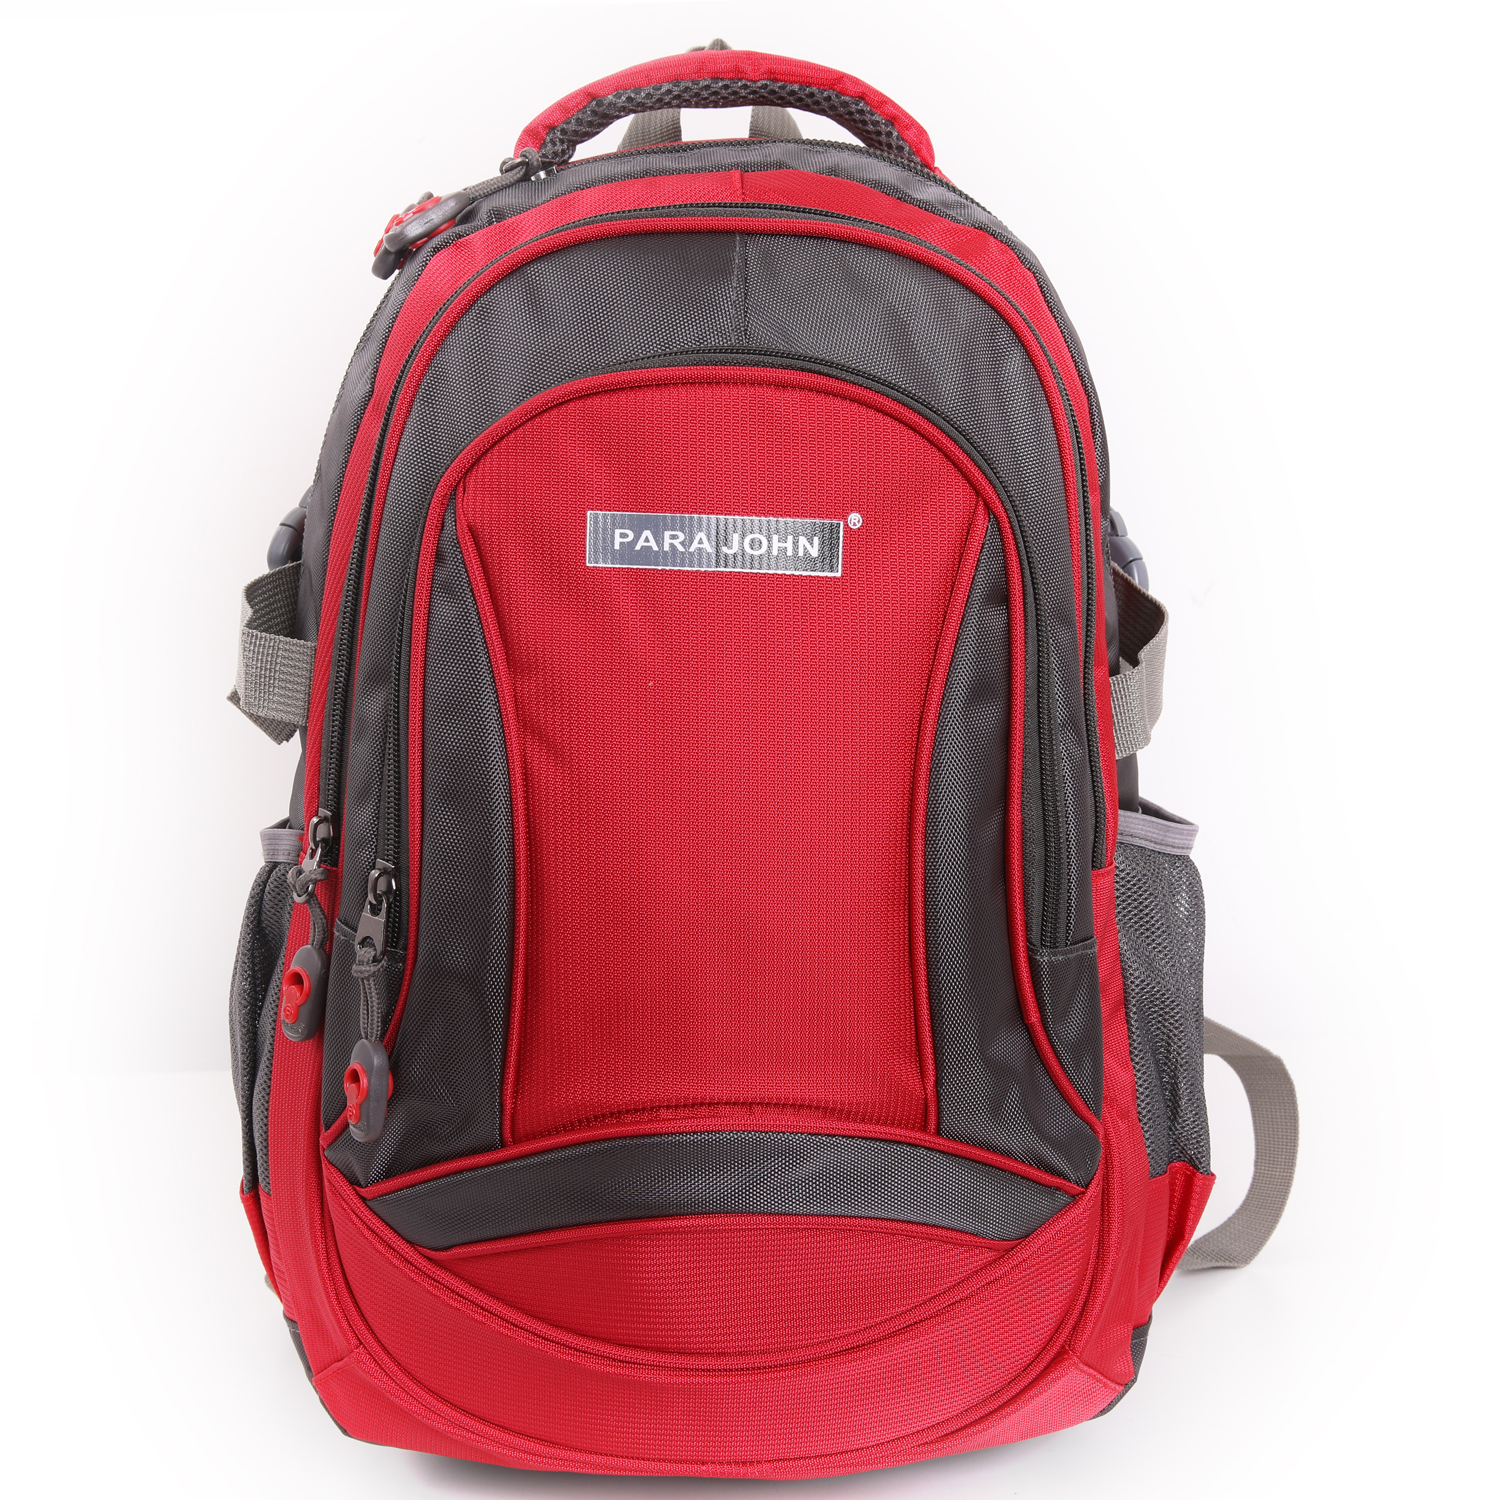 PARA JOHN | Product categories | School Bags